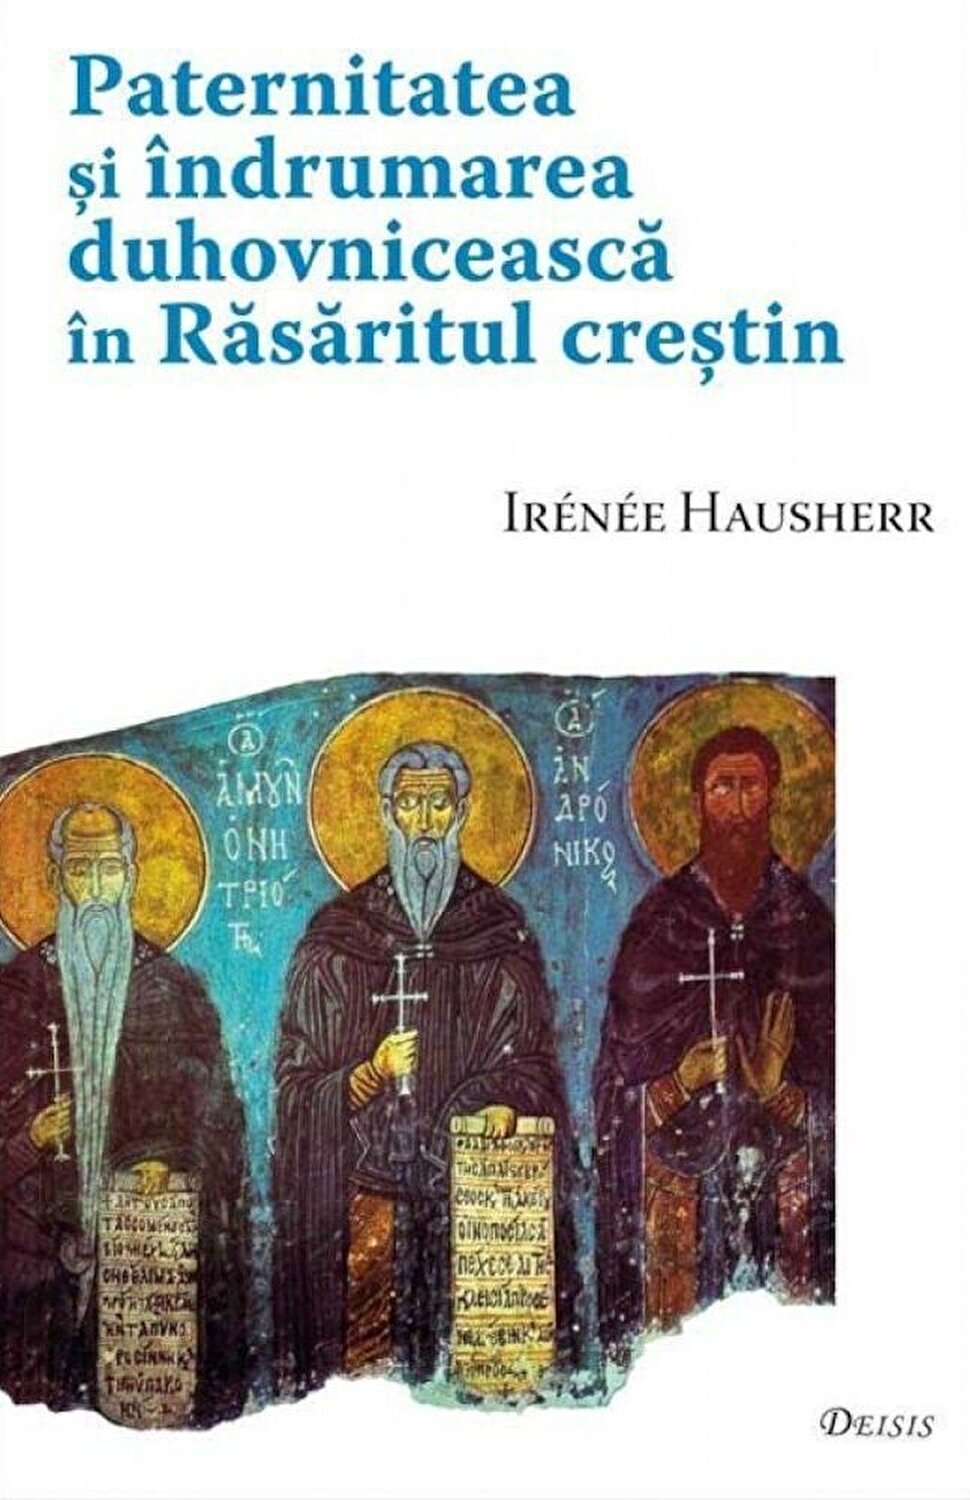 PDF Paternitatea si indrumarea duhovniceasca in Rasaritul crestin | Irenee Hausherr carturesti.ro Carte